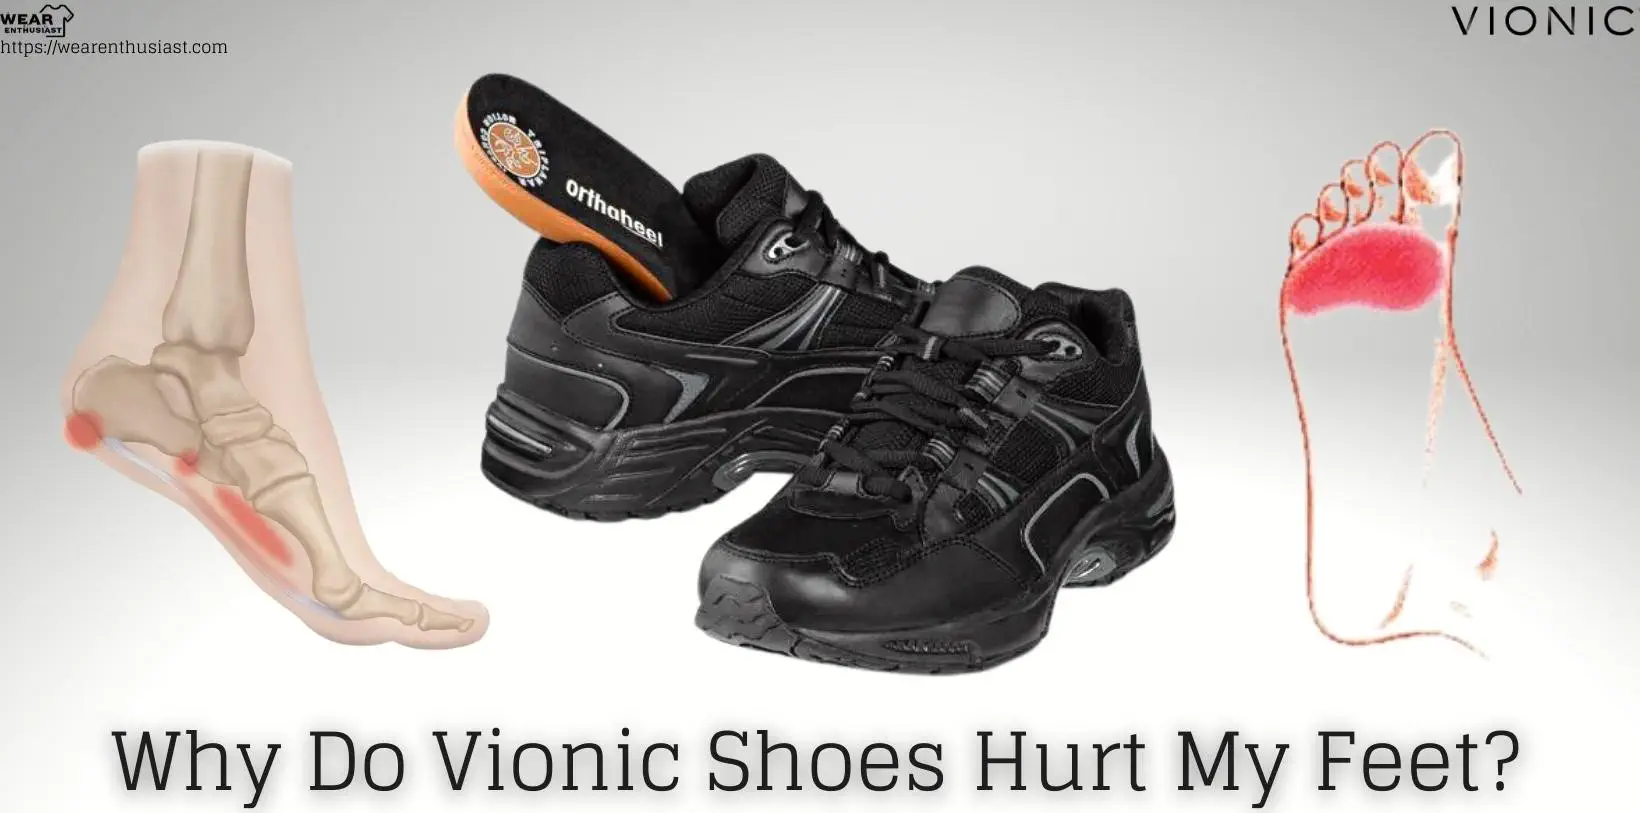 Why Do Vionic Shoes Hurt My Feet?